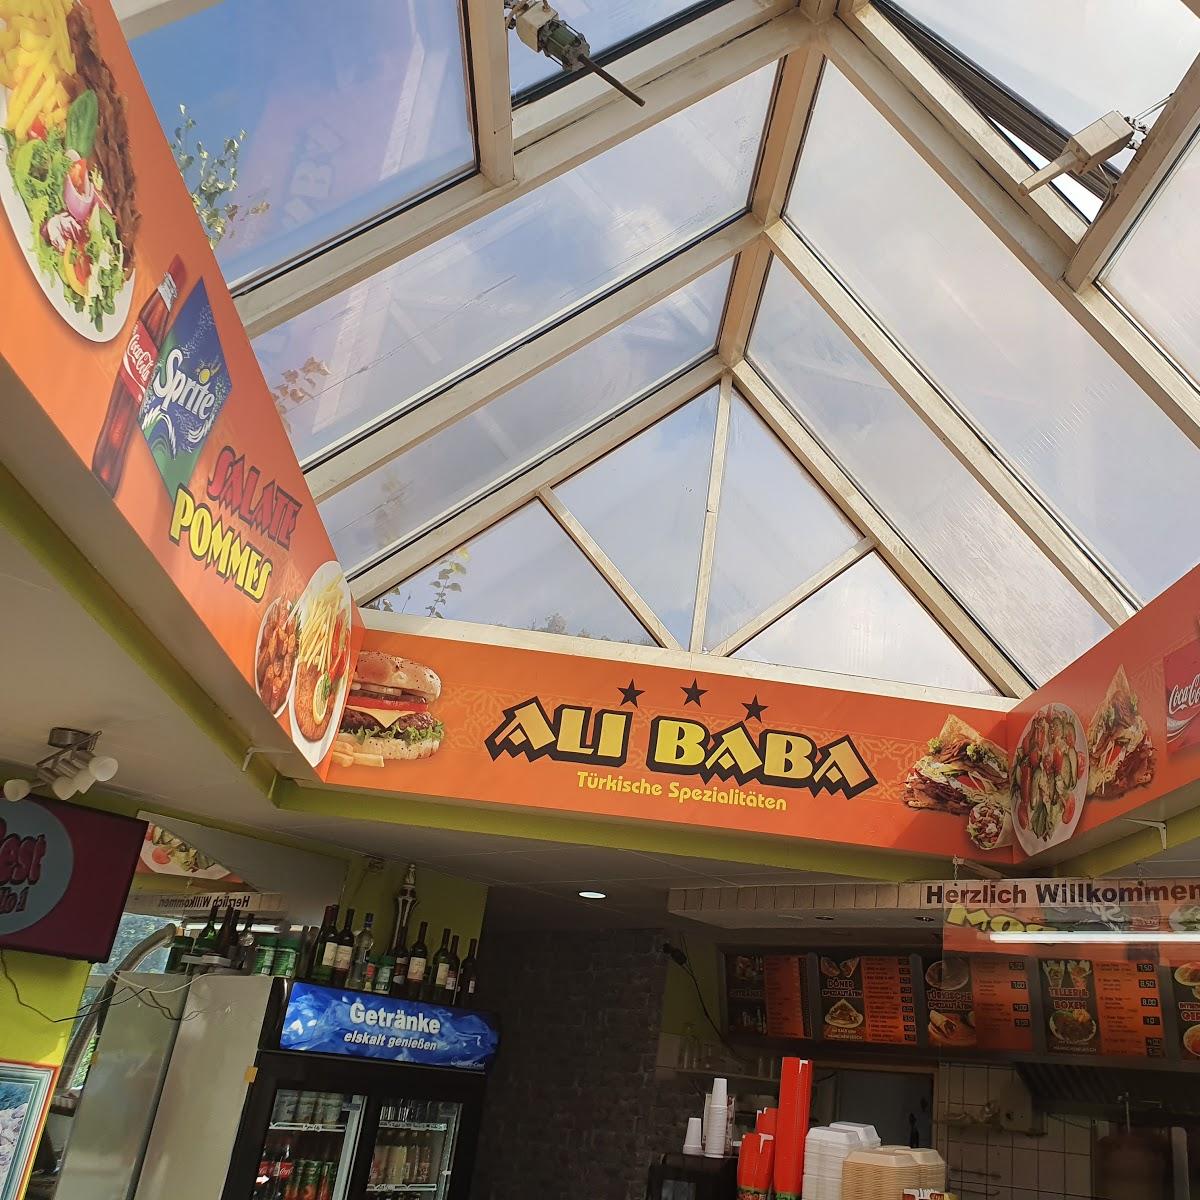 Restaurant "Ali Baba" in Bad Belzig